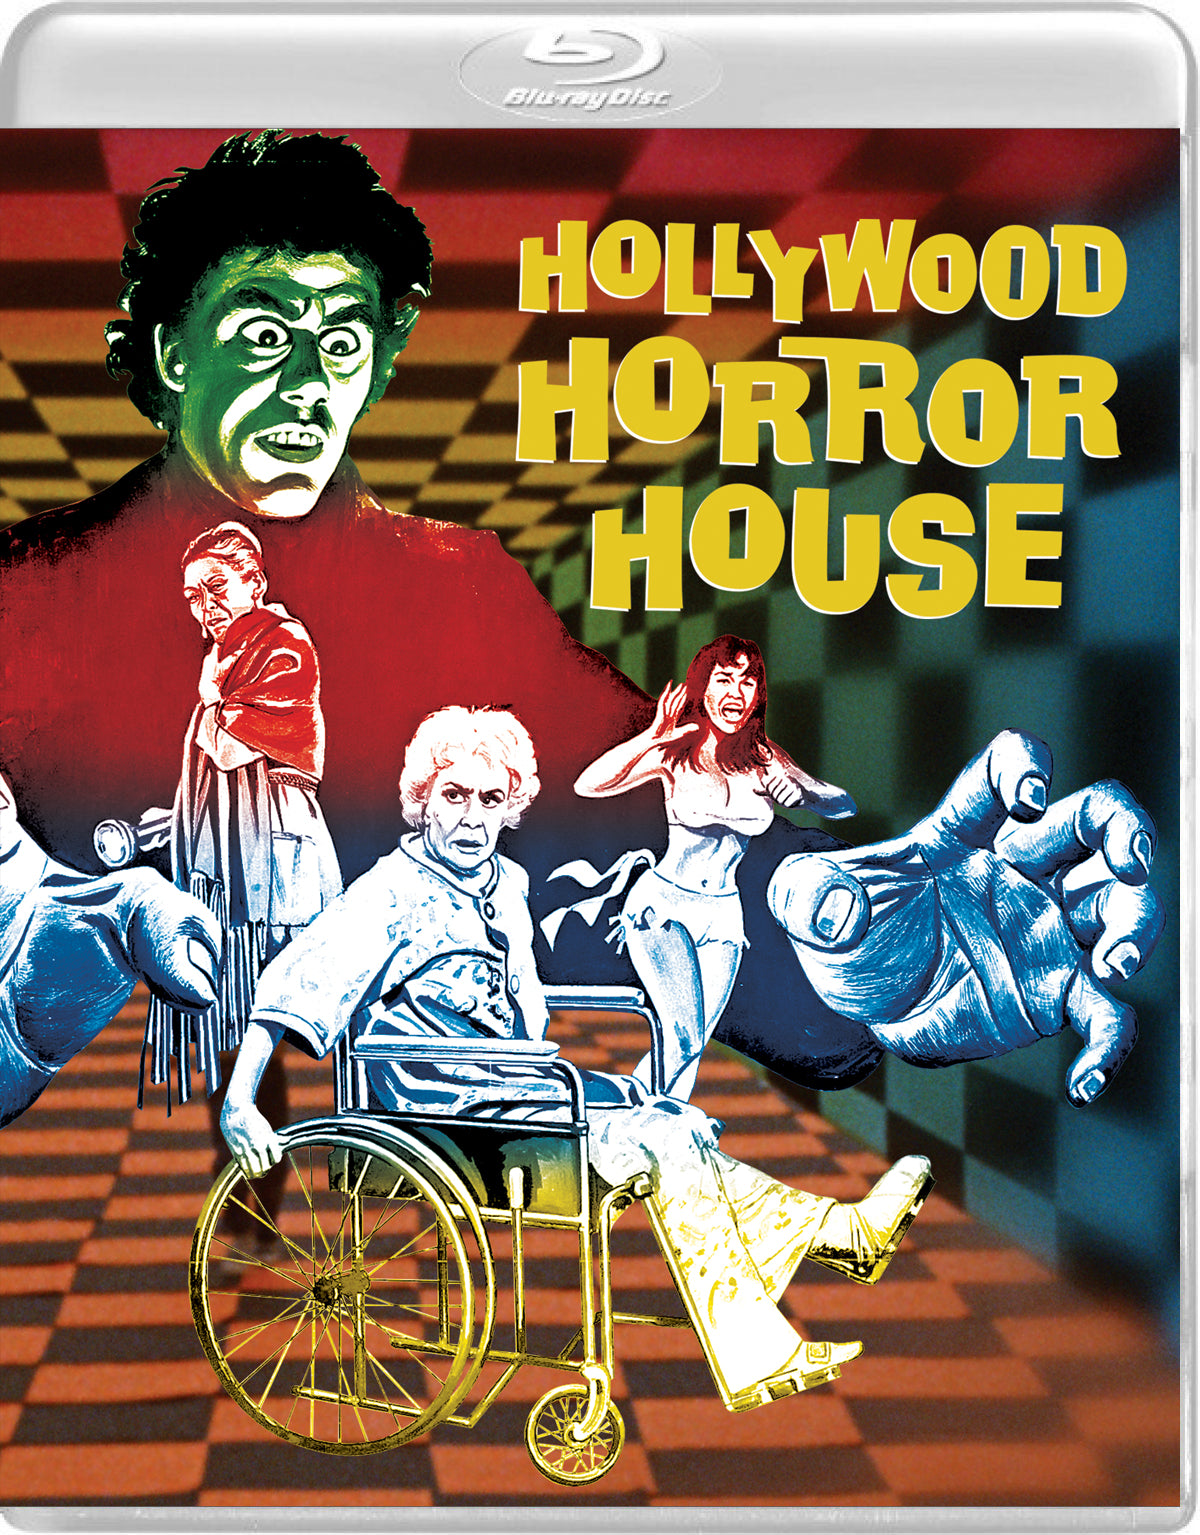 Hollywood Horror House [Blu-ray] cover art